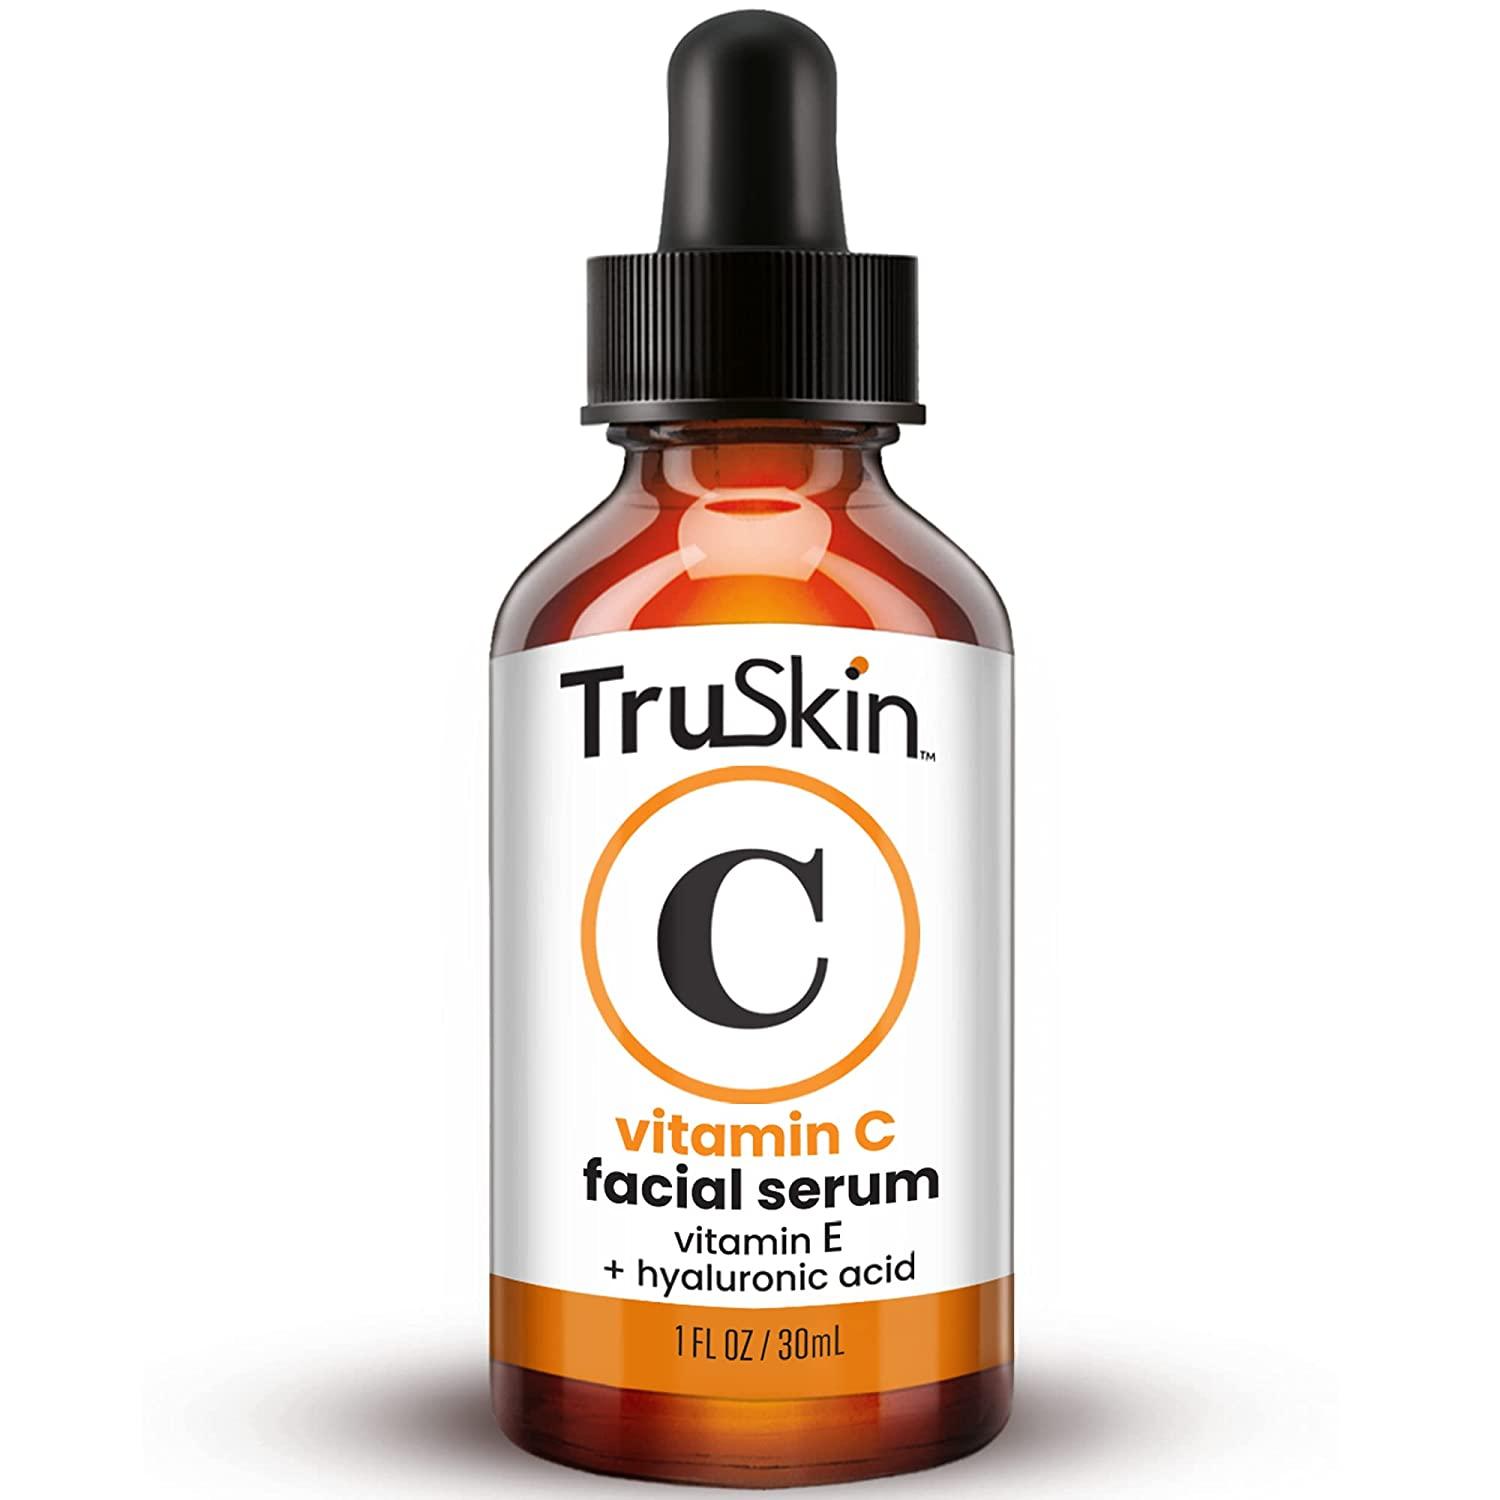 TruSkin Vitamin C Serum for Face Serum for $13.99 Shipped